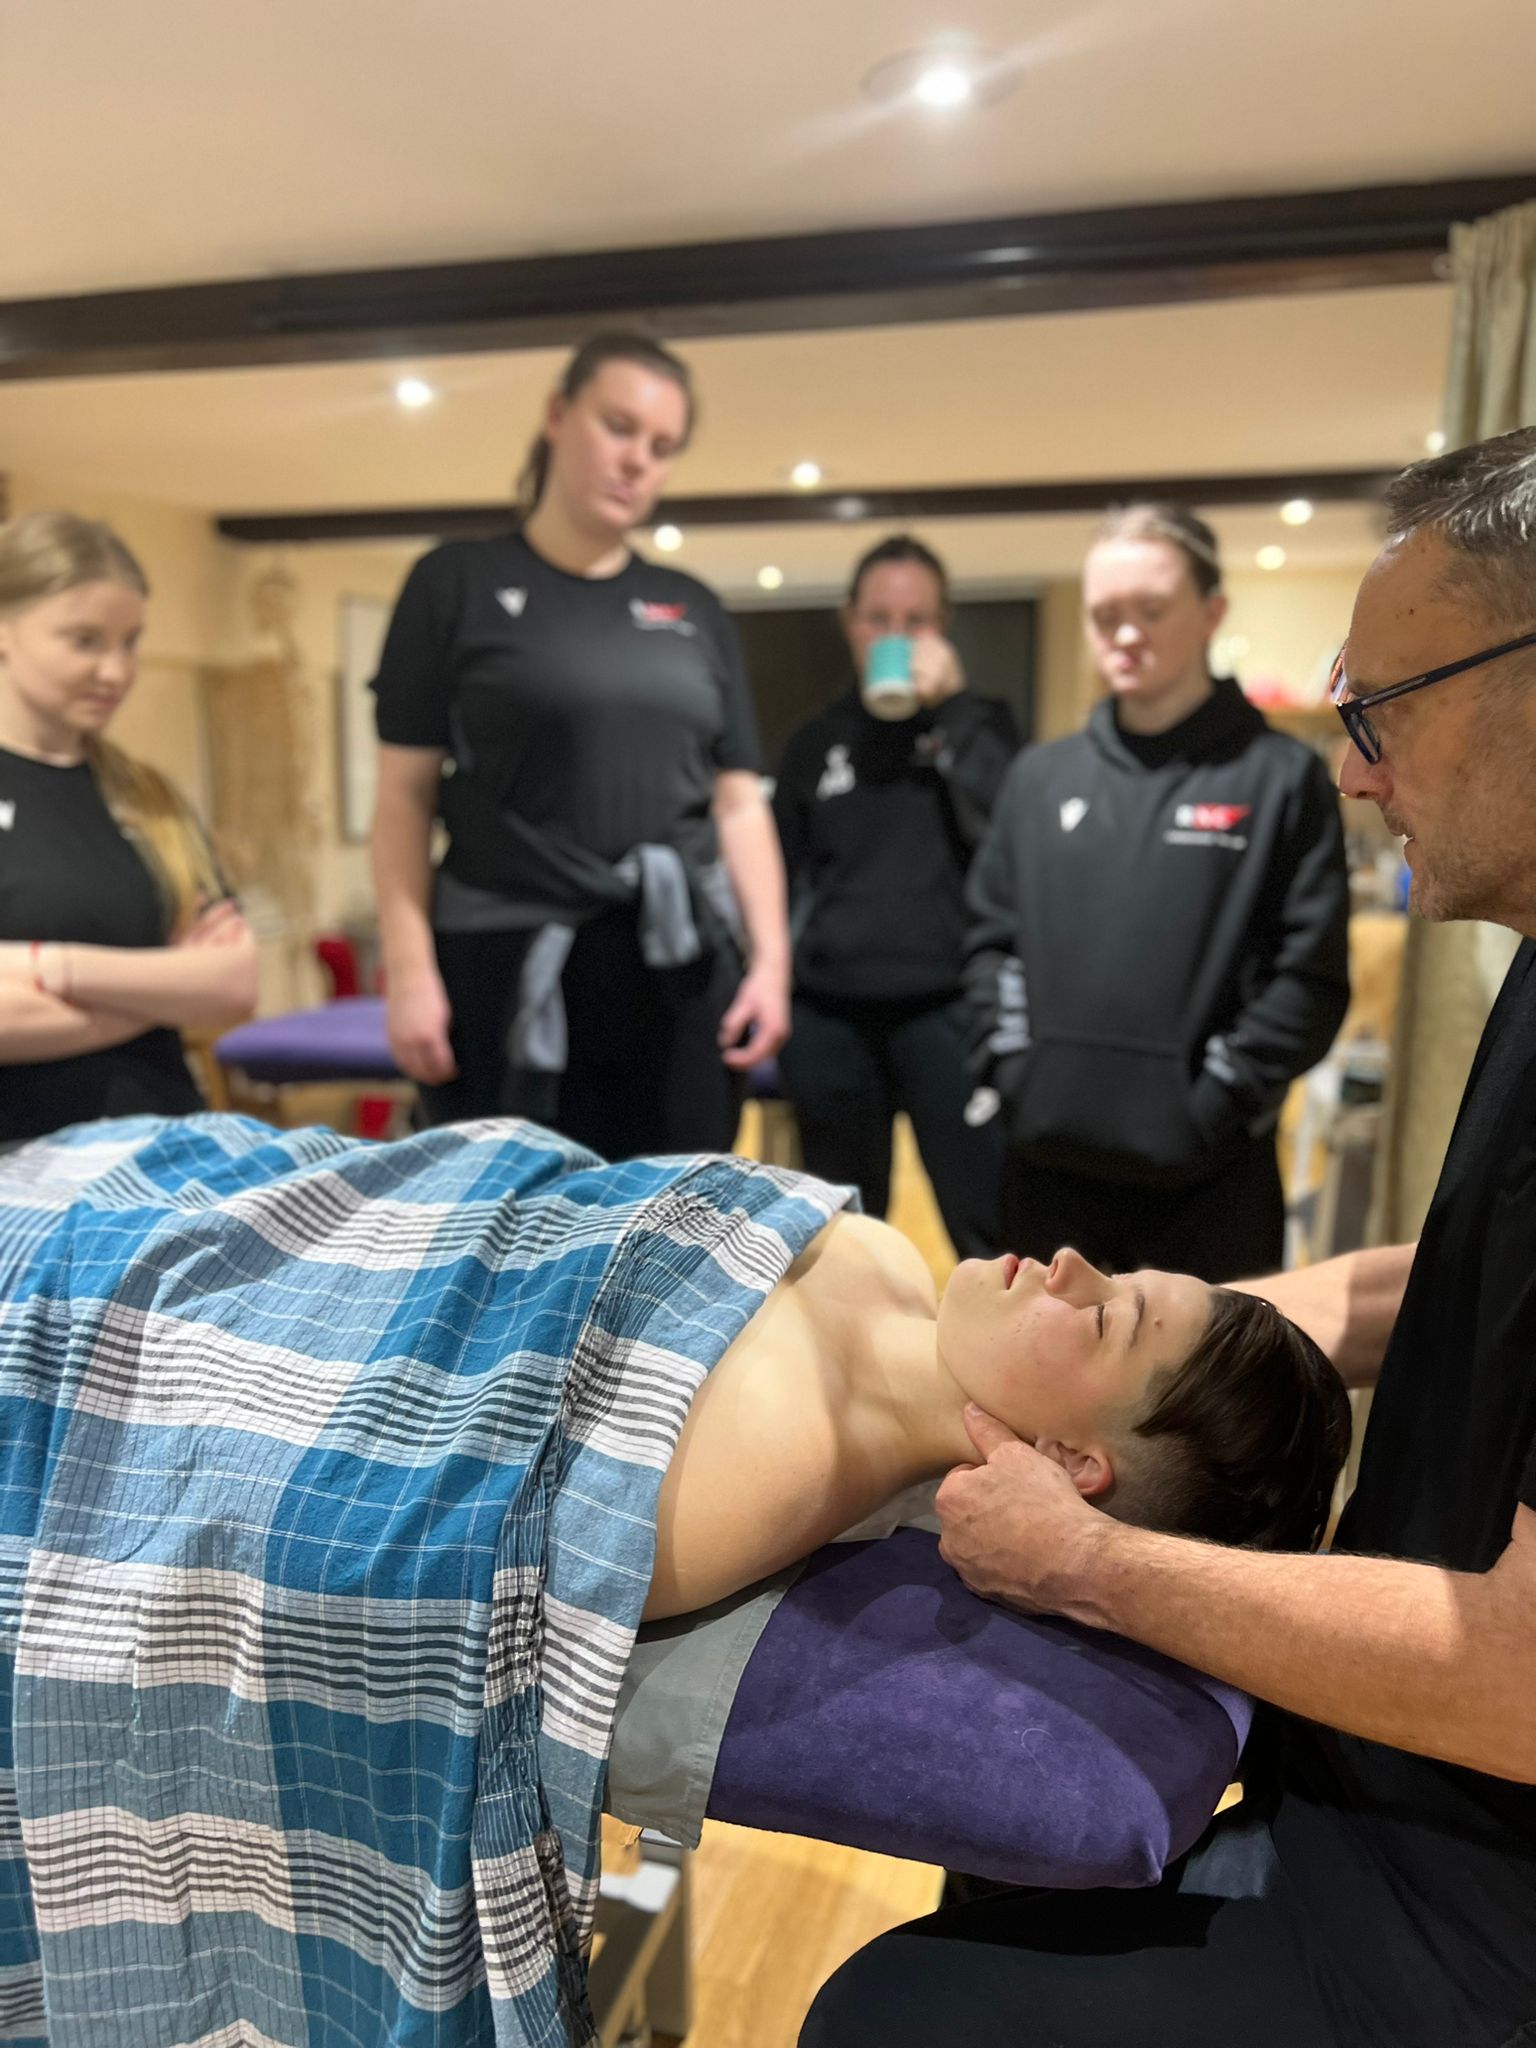 Massage students gain valuable professional development